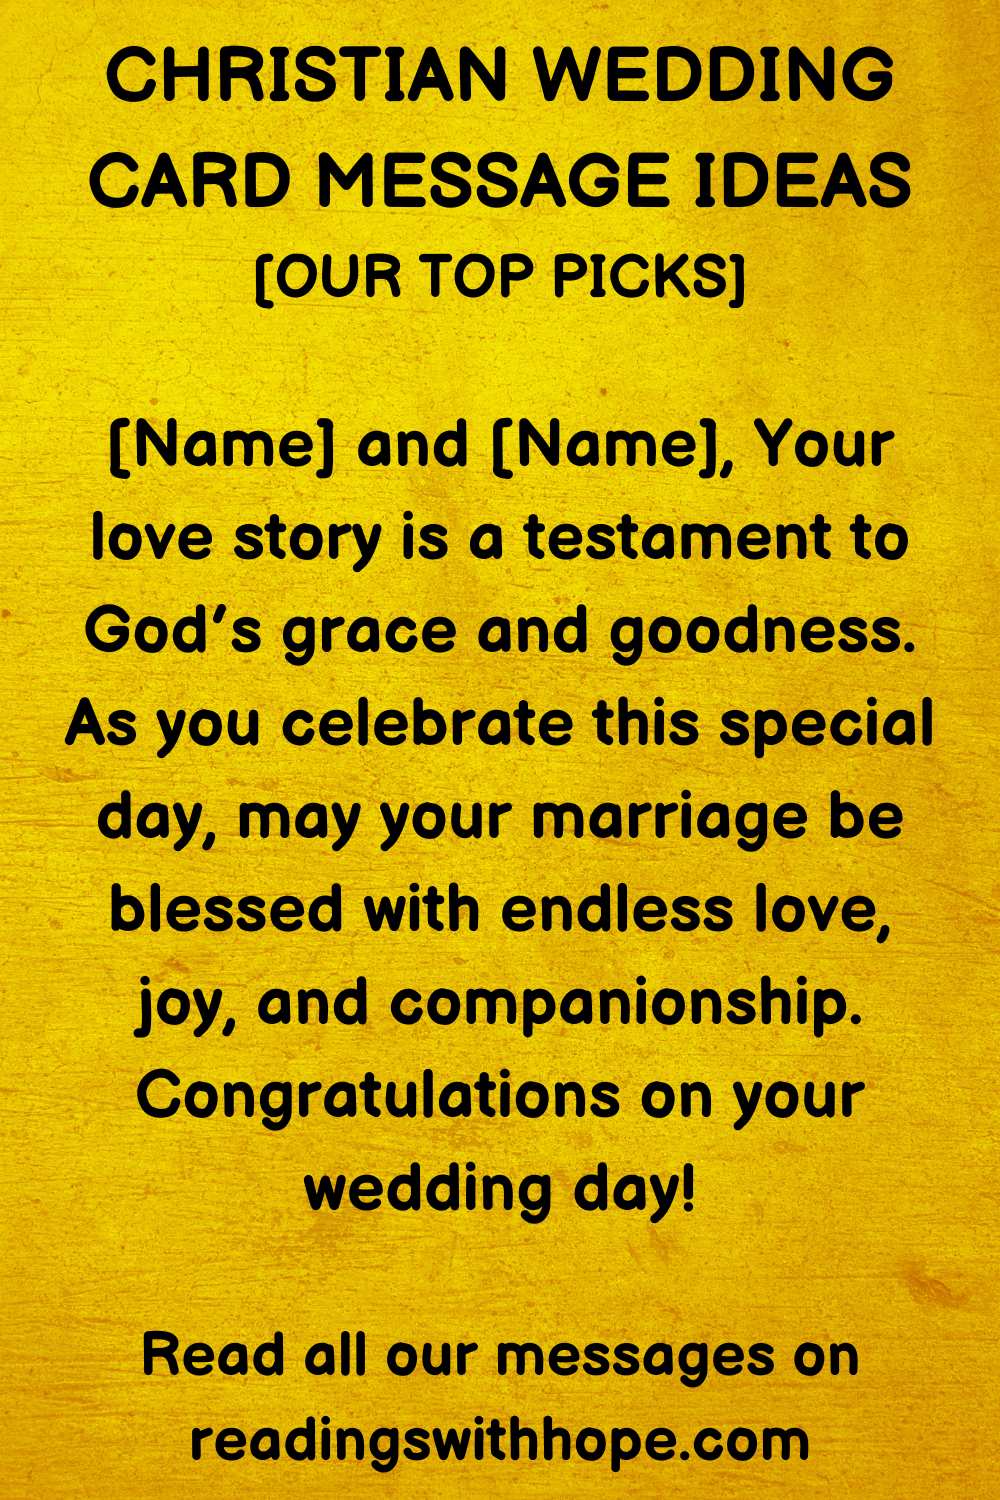 Christian Wedding Card Message Ideas